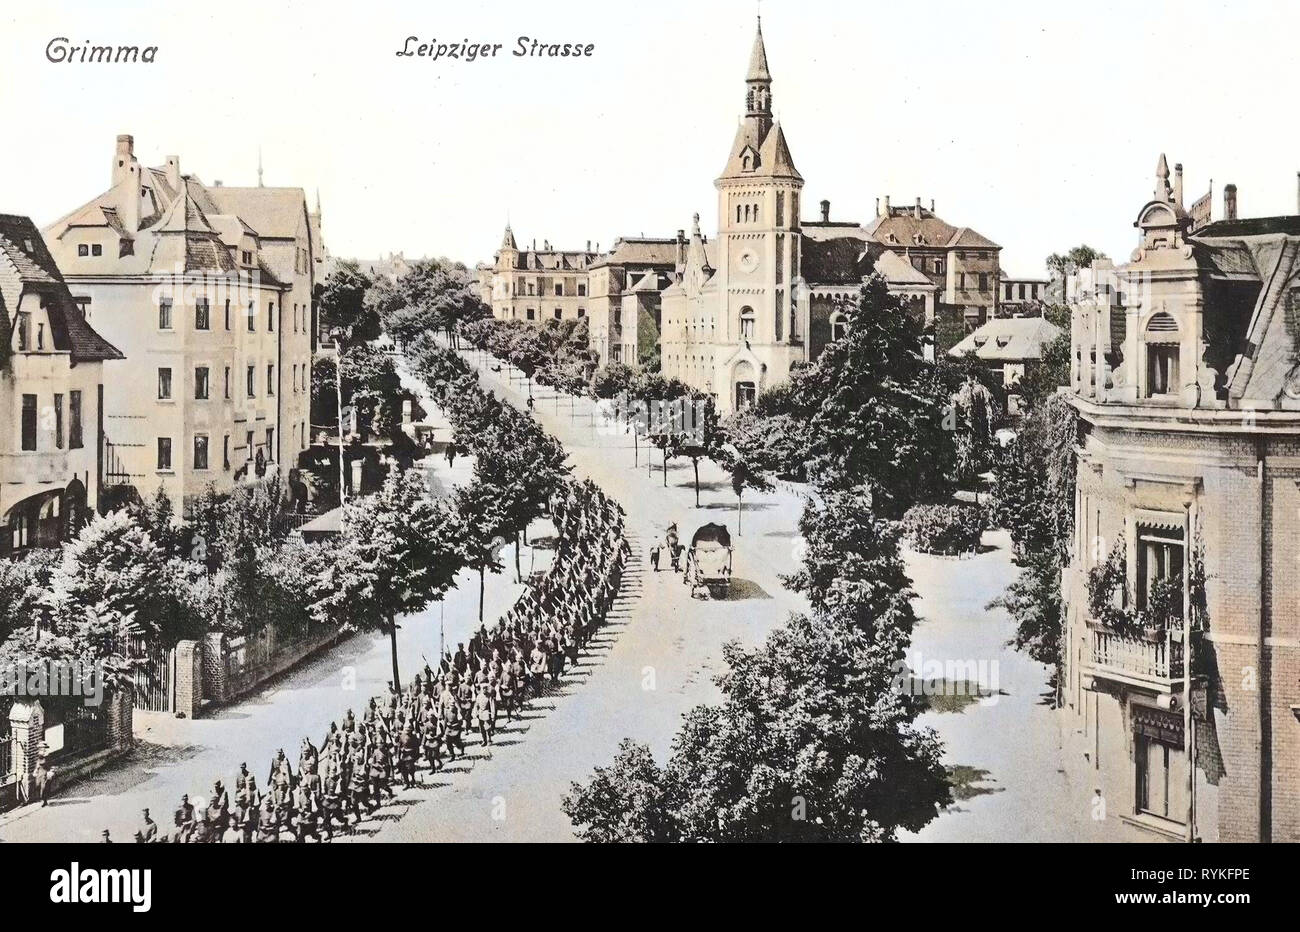 Buildings in Grimma, Army of Saxony, 1915, Landkreis Leipzig, Grimma, Leipziger Straße, Germany Stock Photo